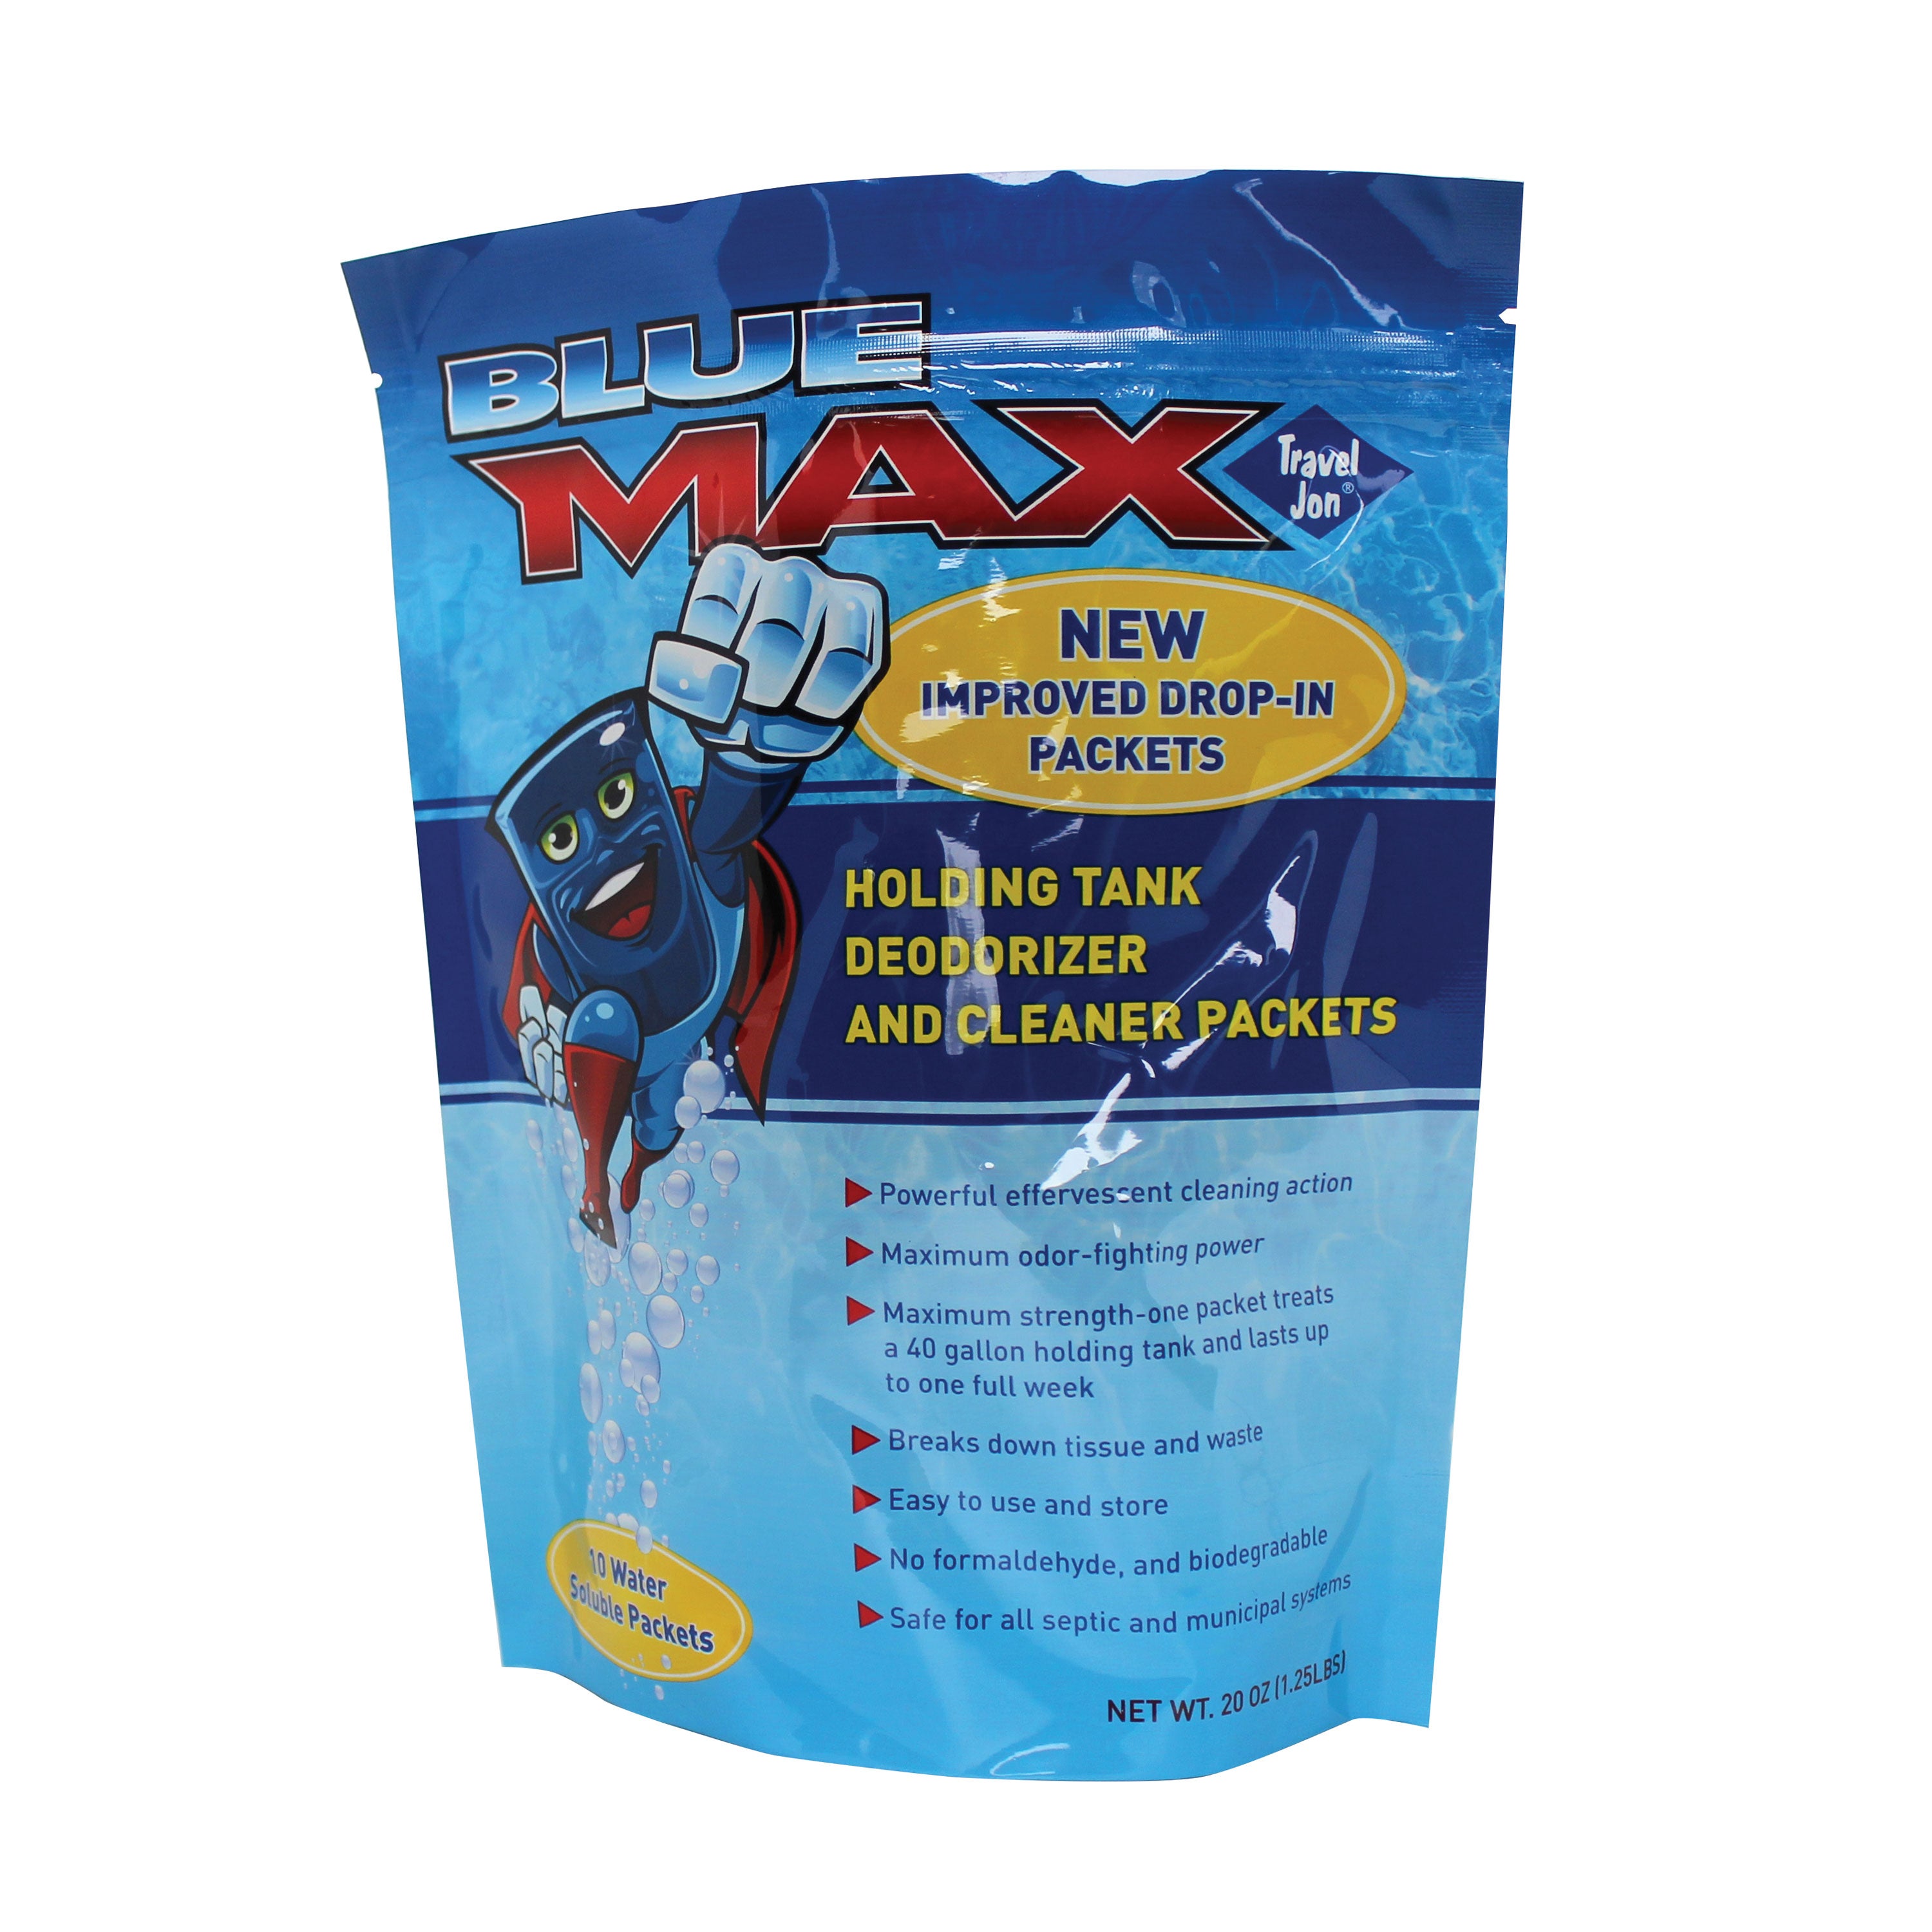 Century Chemical 20063-CS Travel Jon Blue Max - 10 Packets